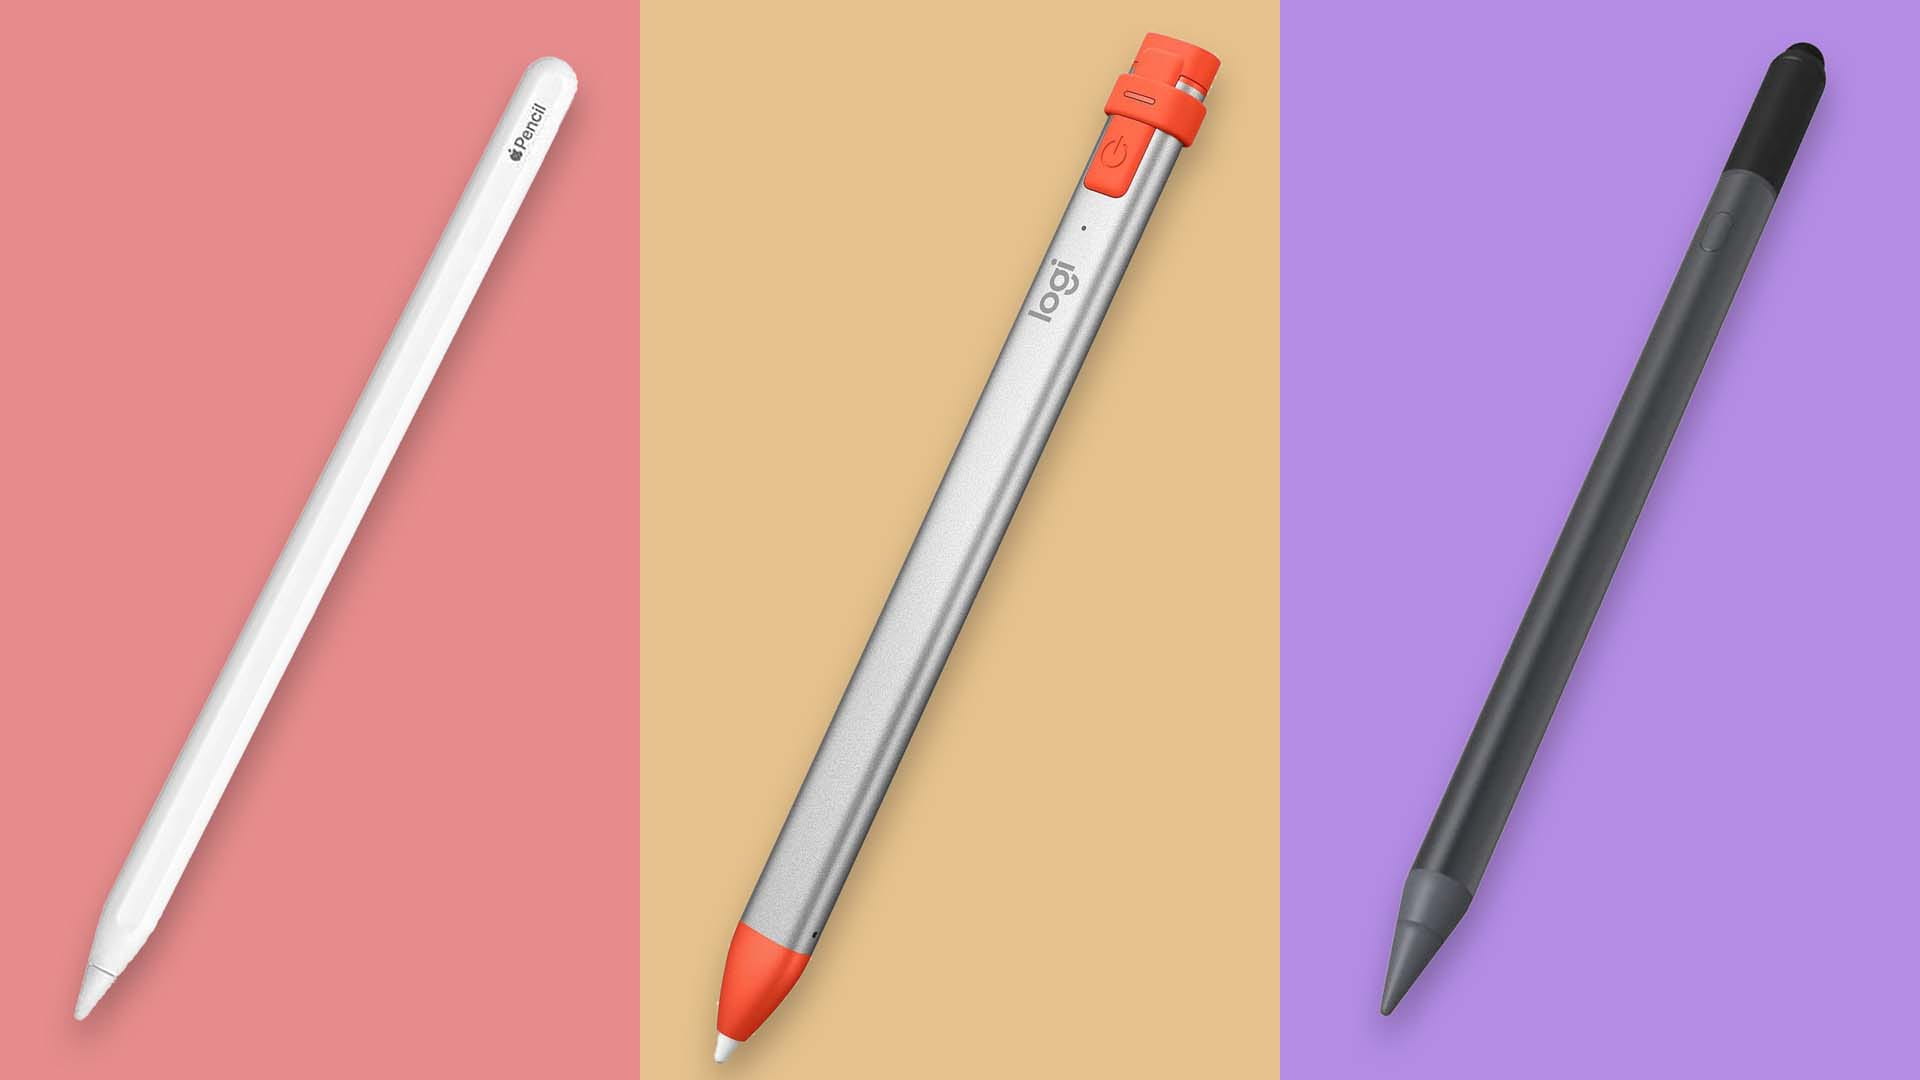 Three examples of Apple Pencils